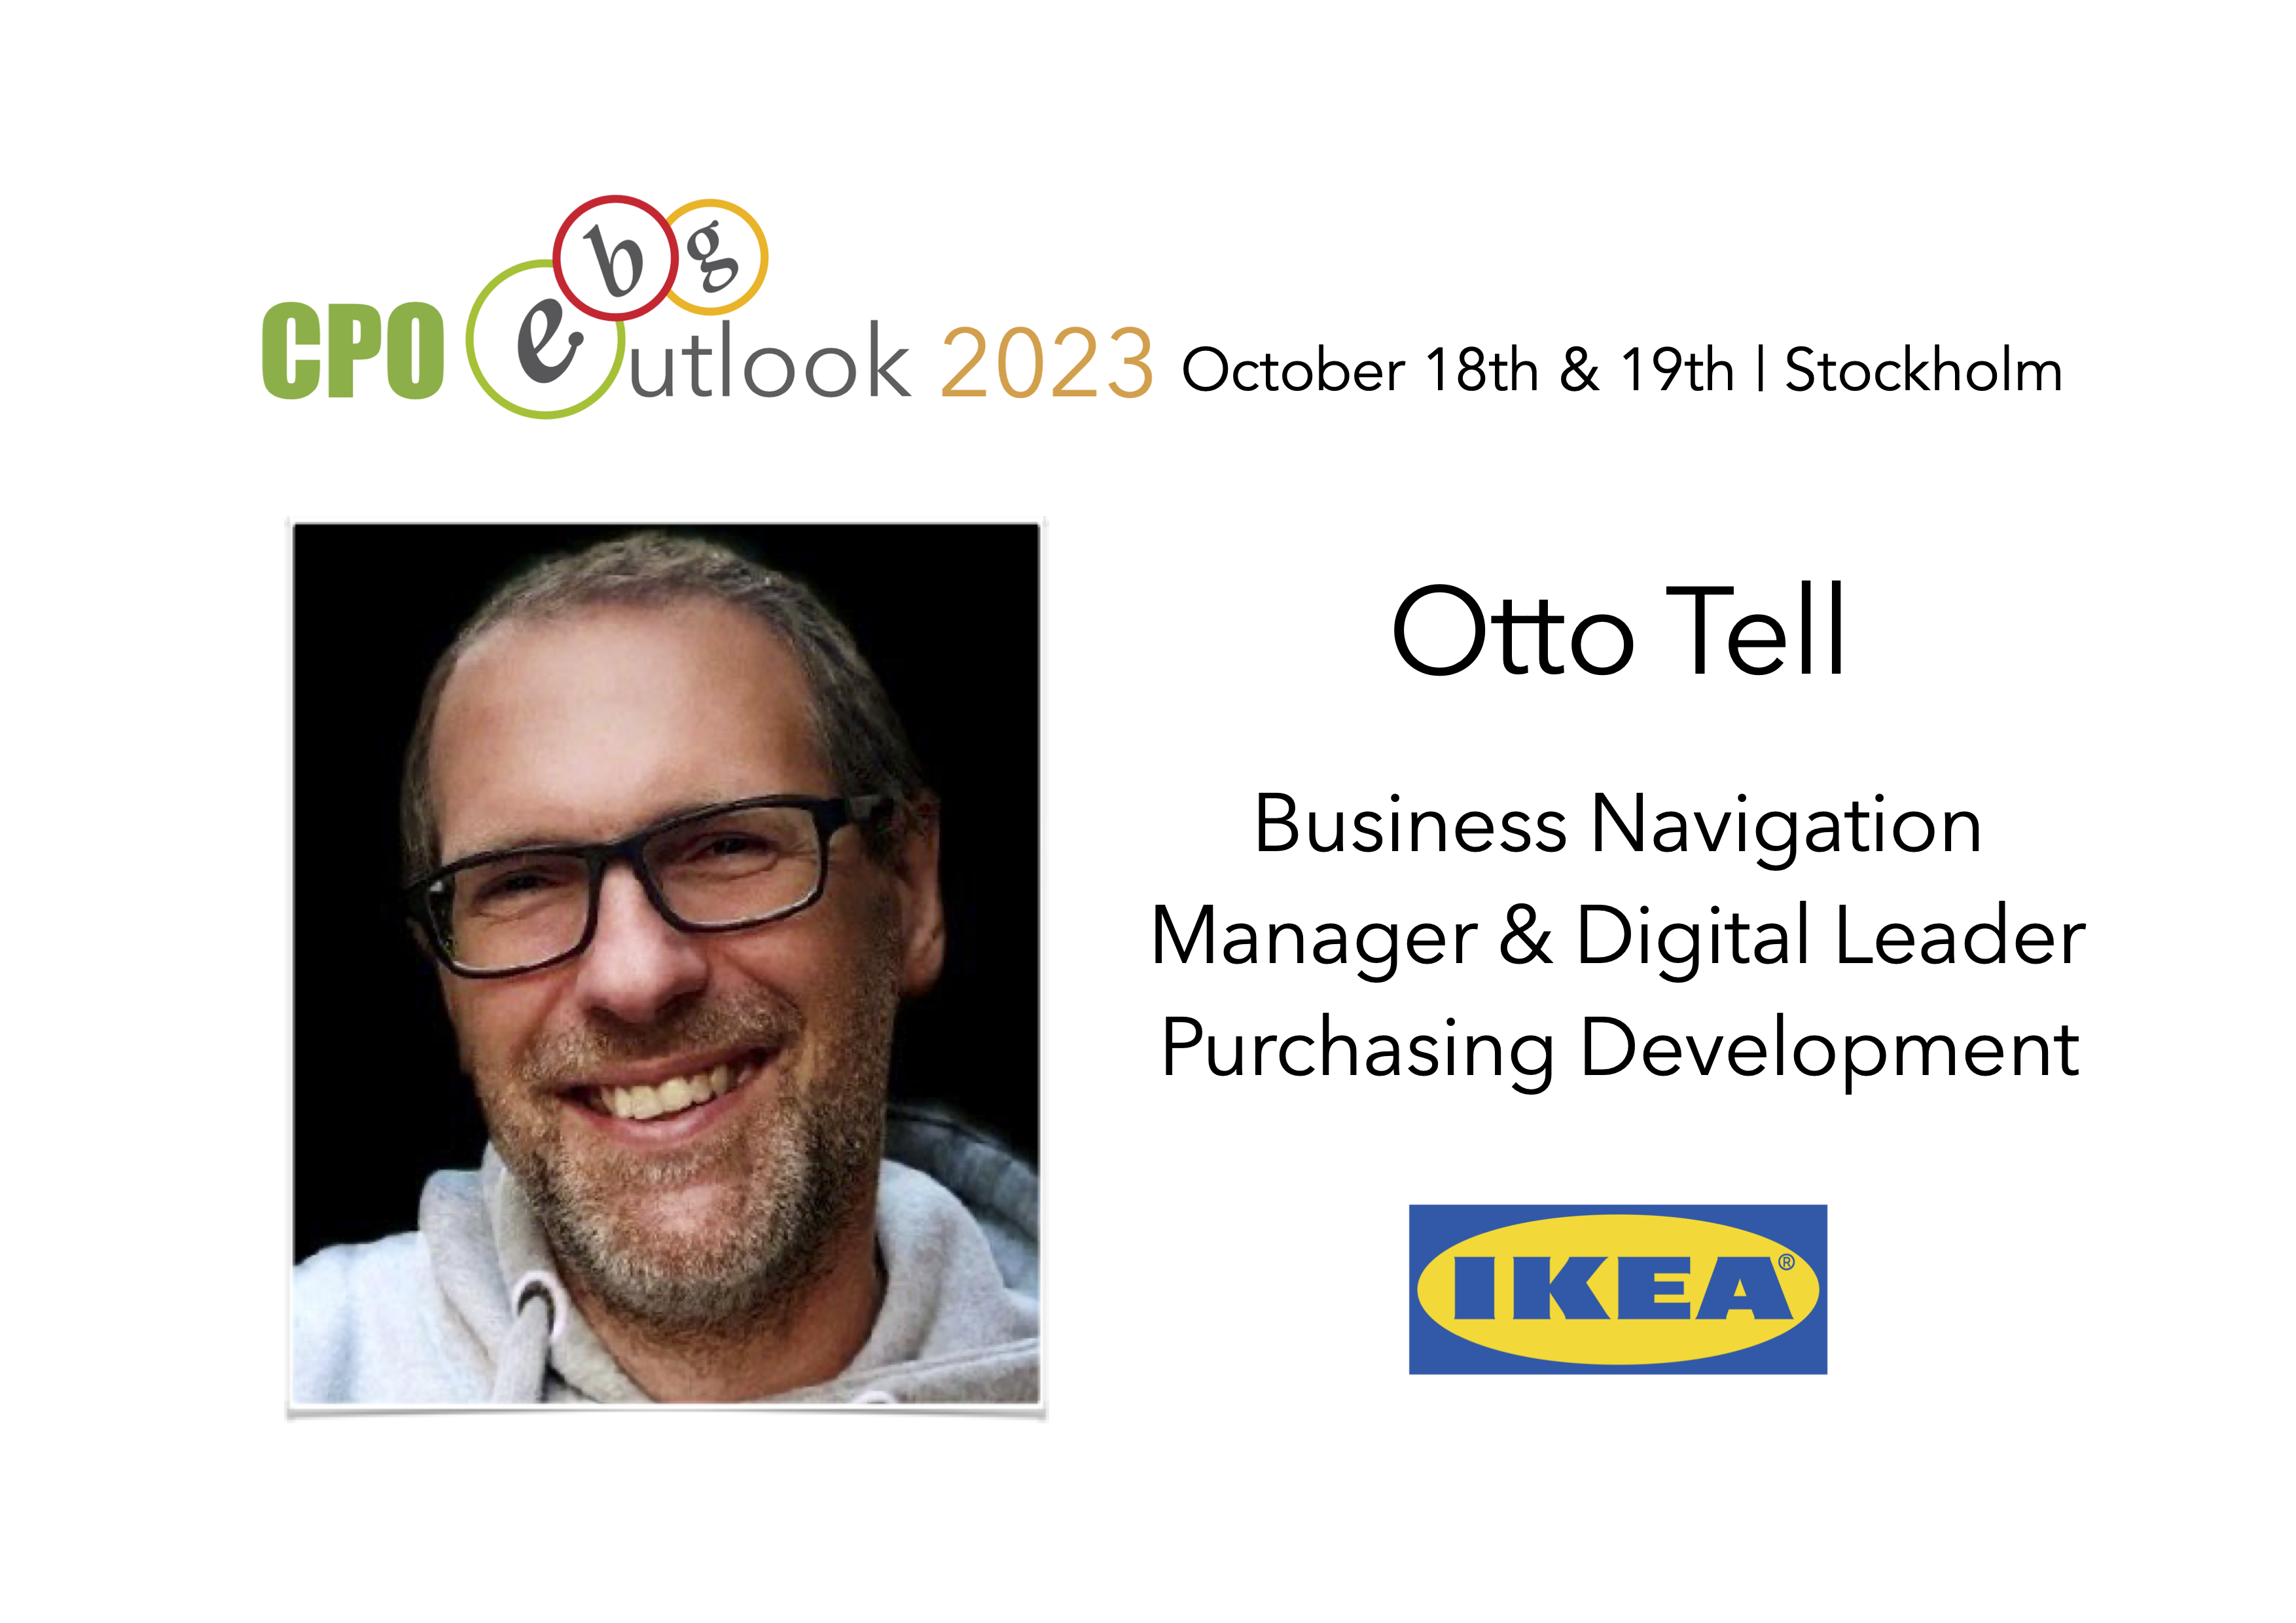 IKEA join CPO Outlook 2023